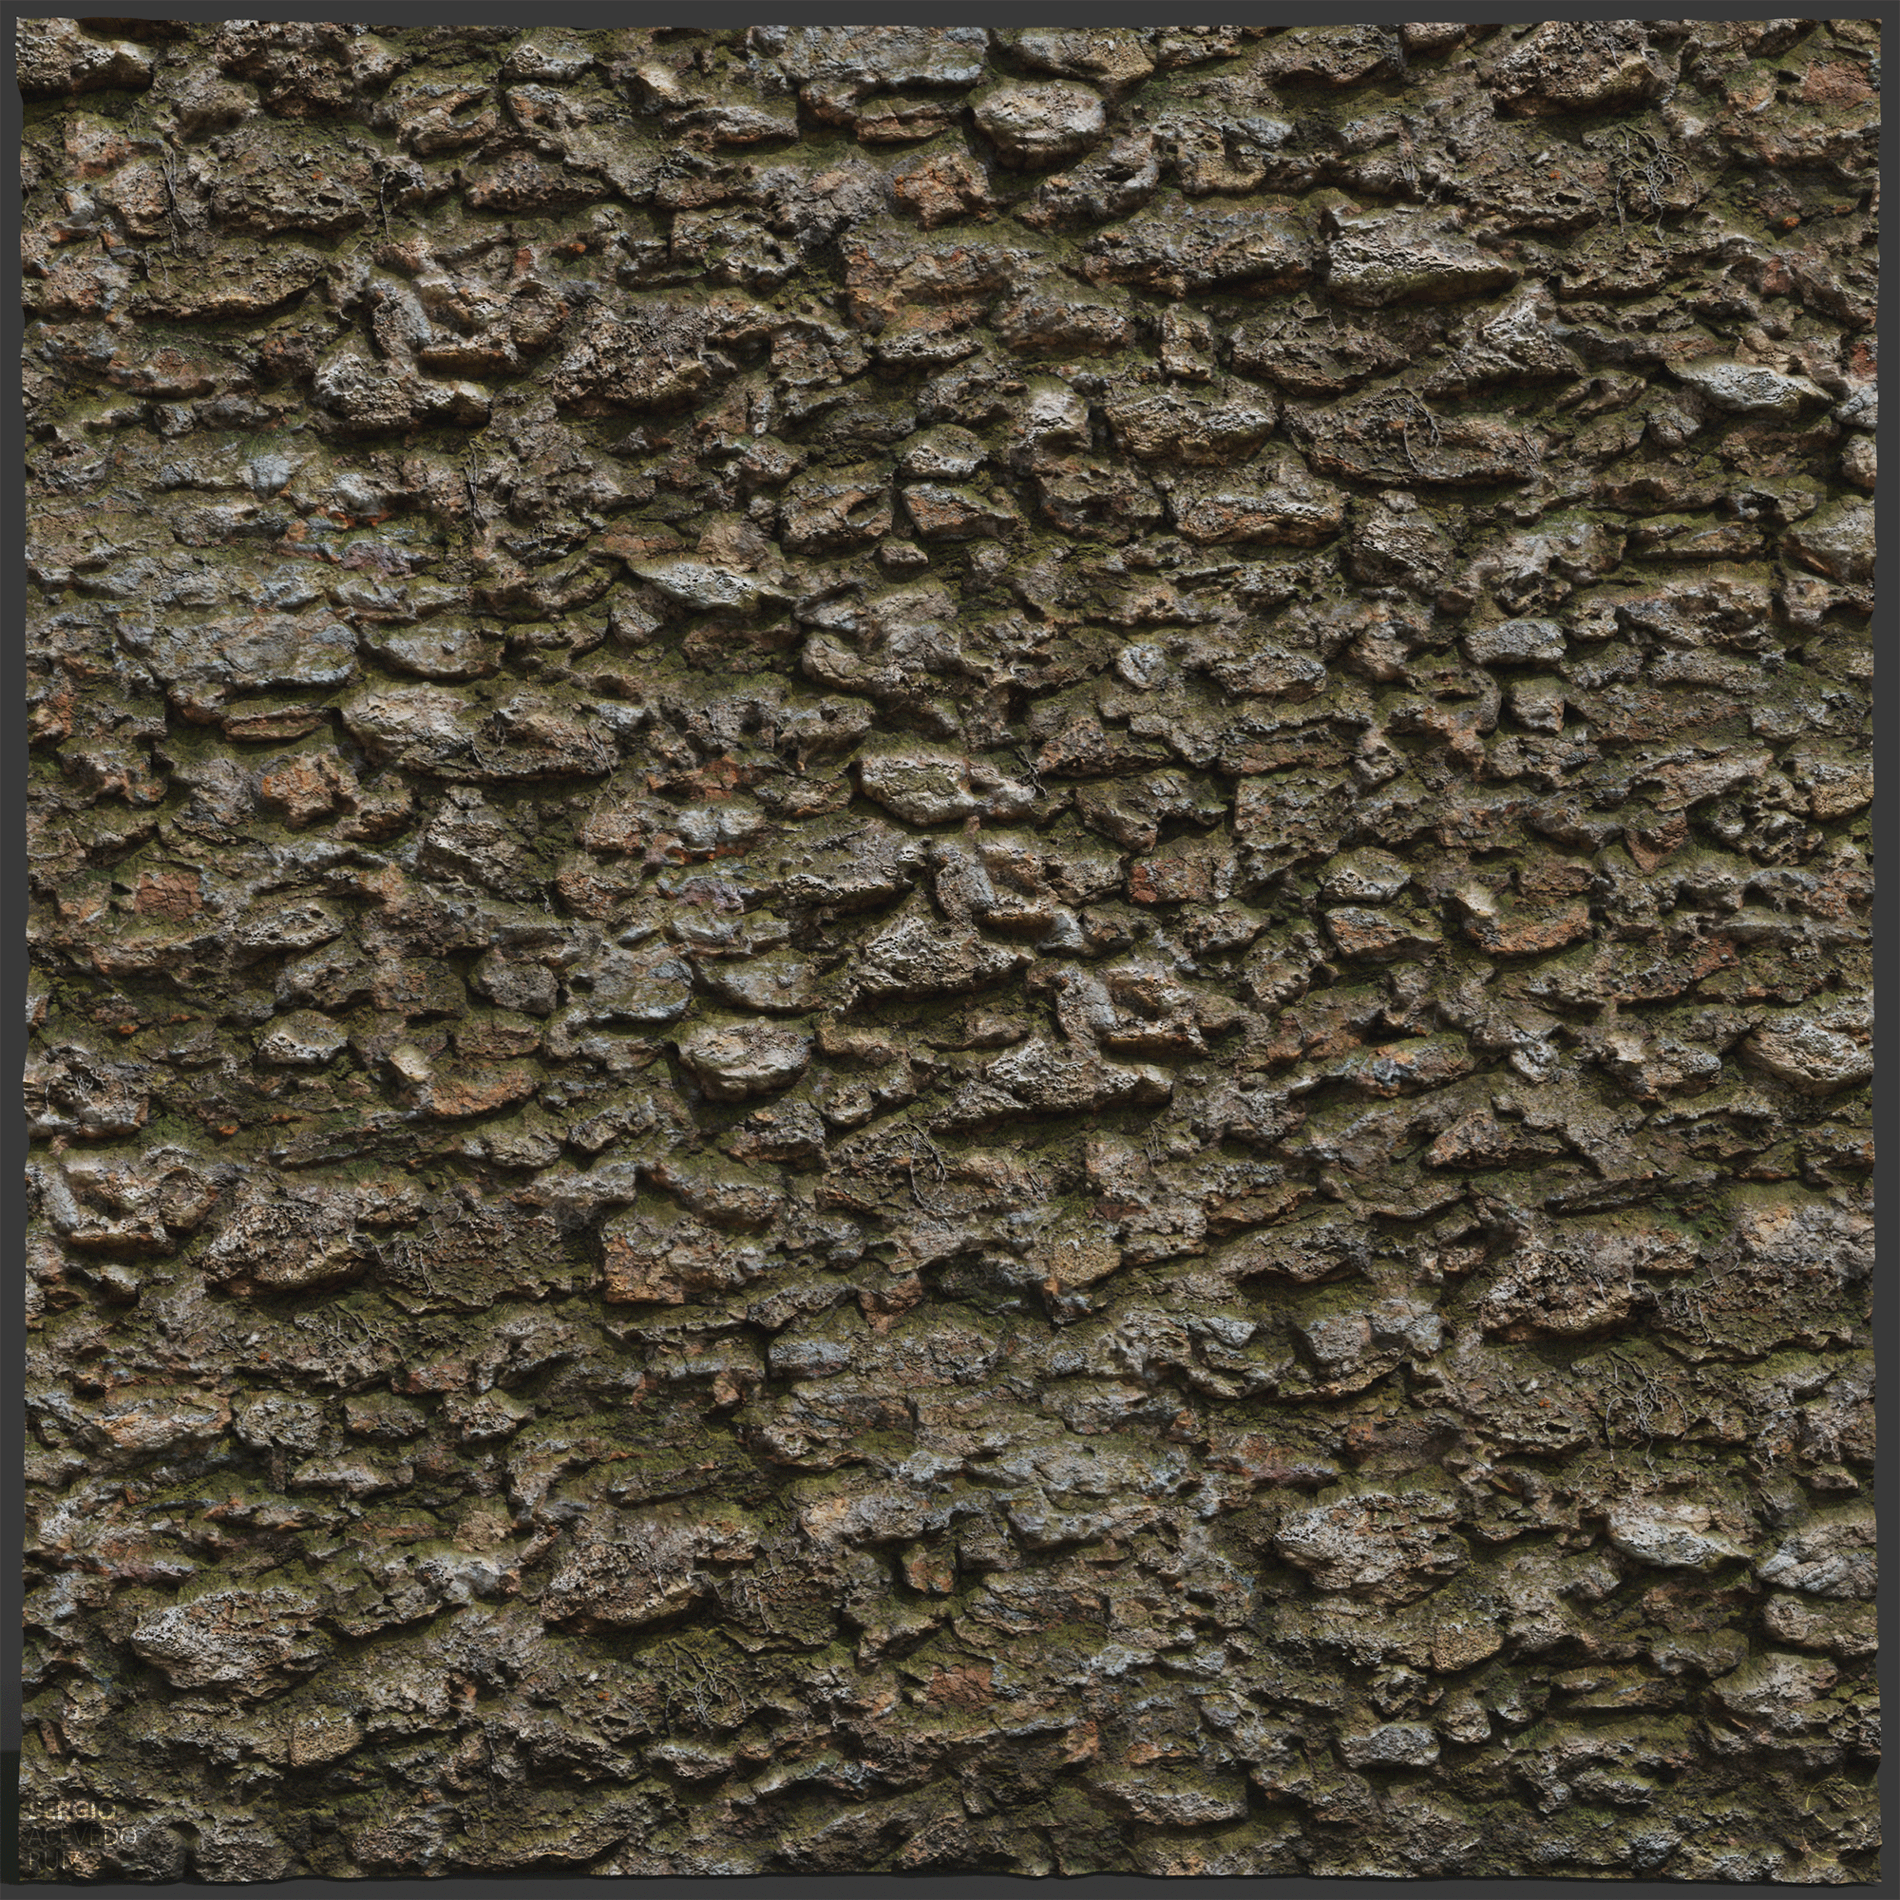 Rural Stone Wall, slightly mossy